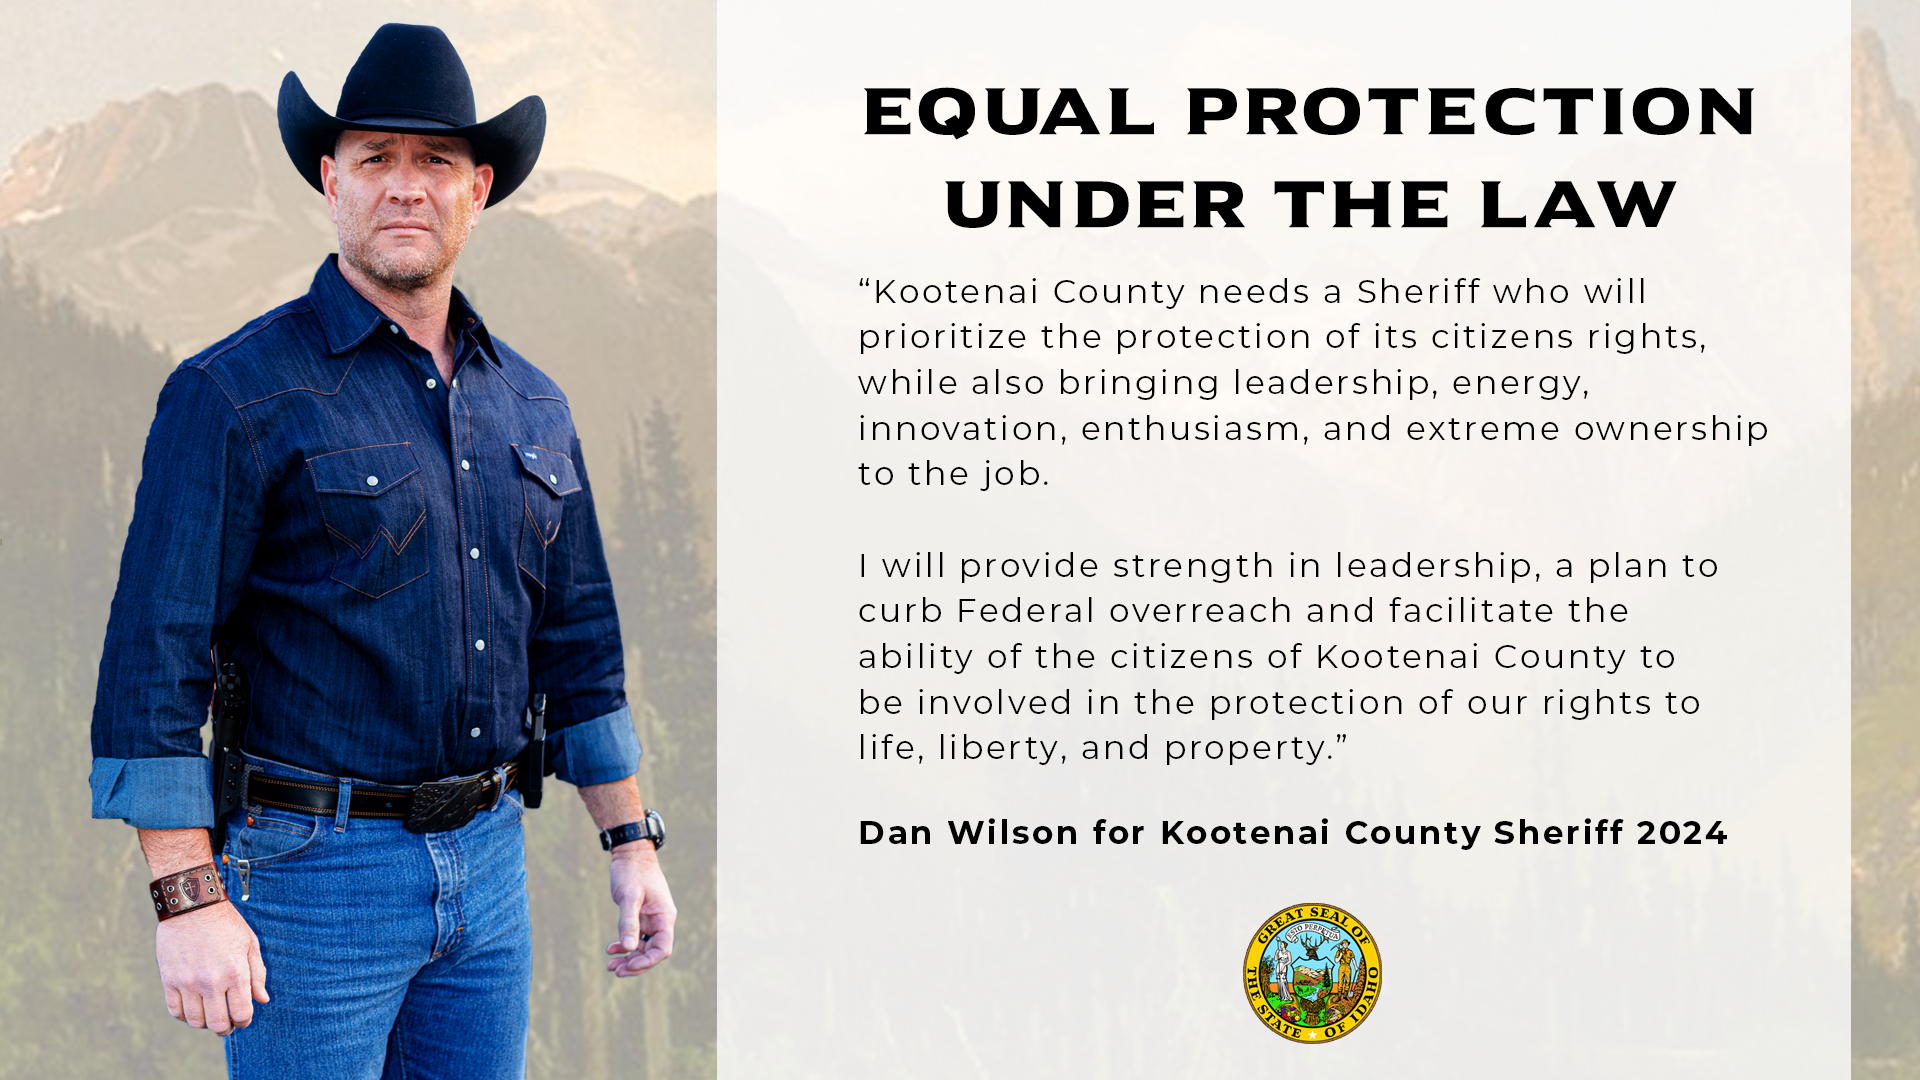 Dan Wilson for Kootenai County Sheriff 2024